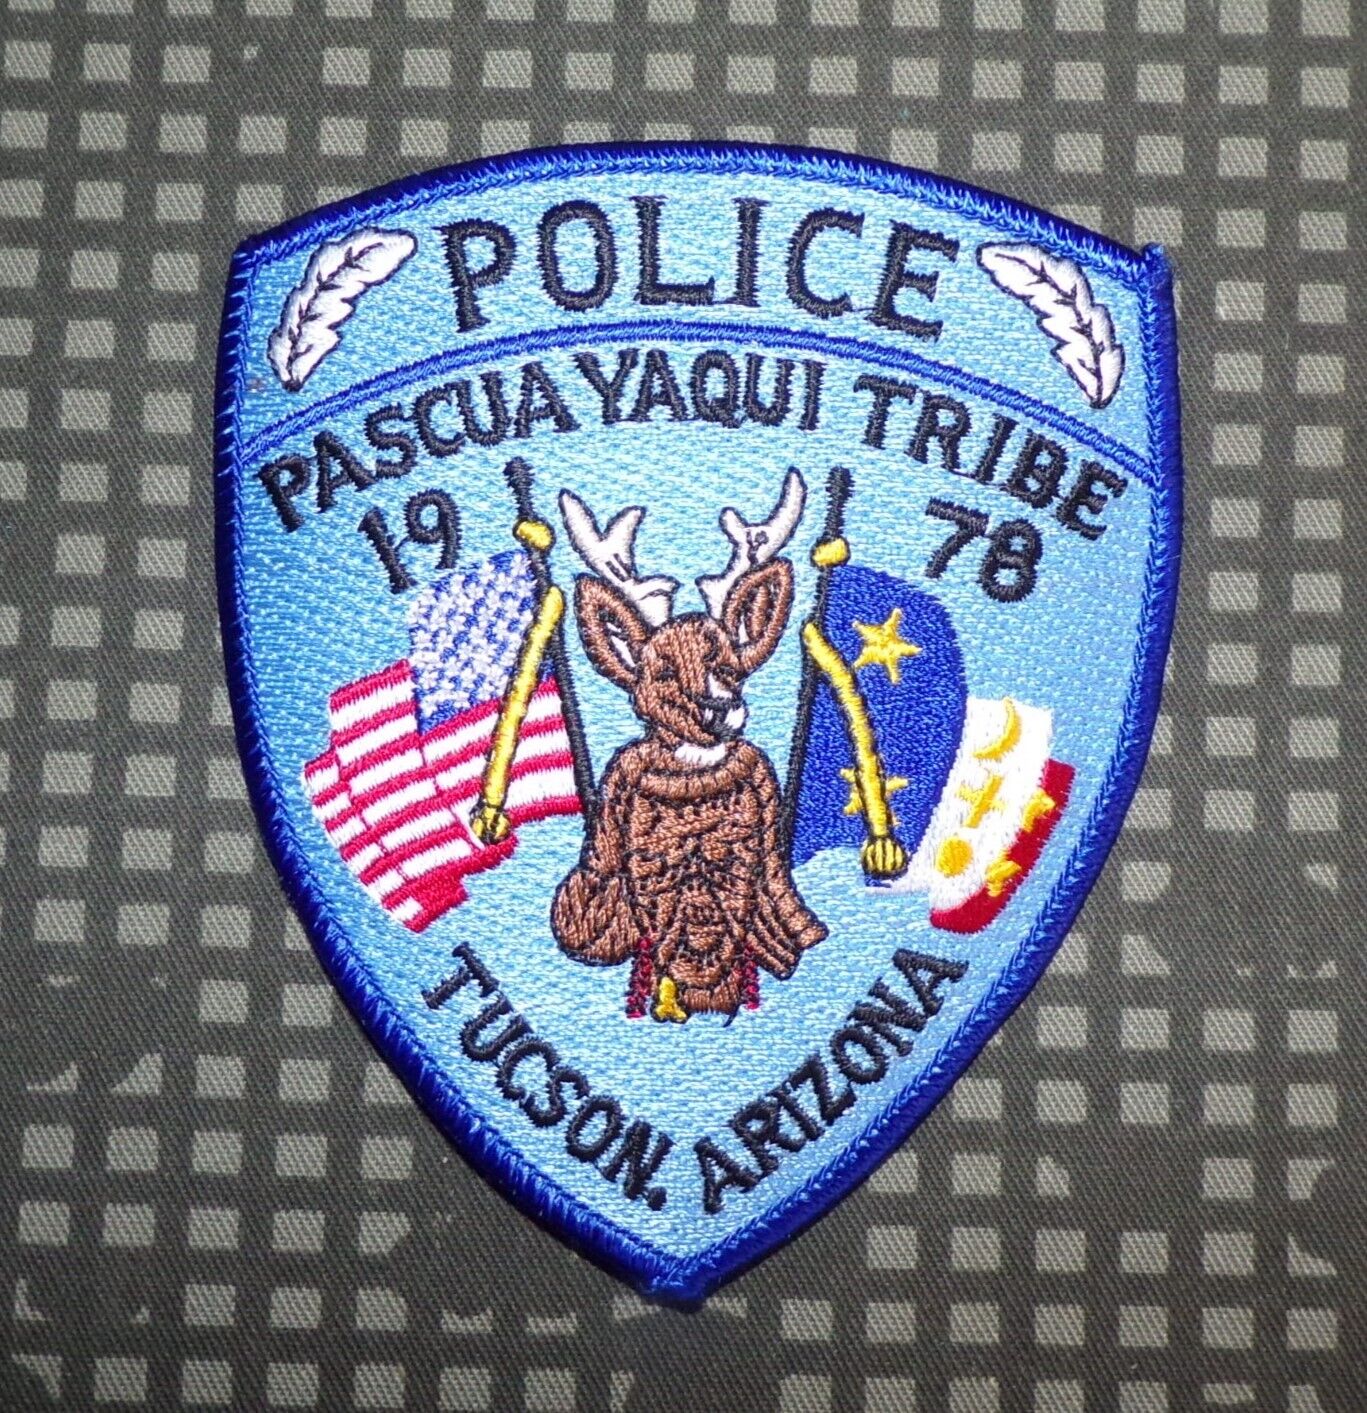 Original USA Pasqua Yaqui Indian Tribal Police Law Enforcement Patch